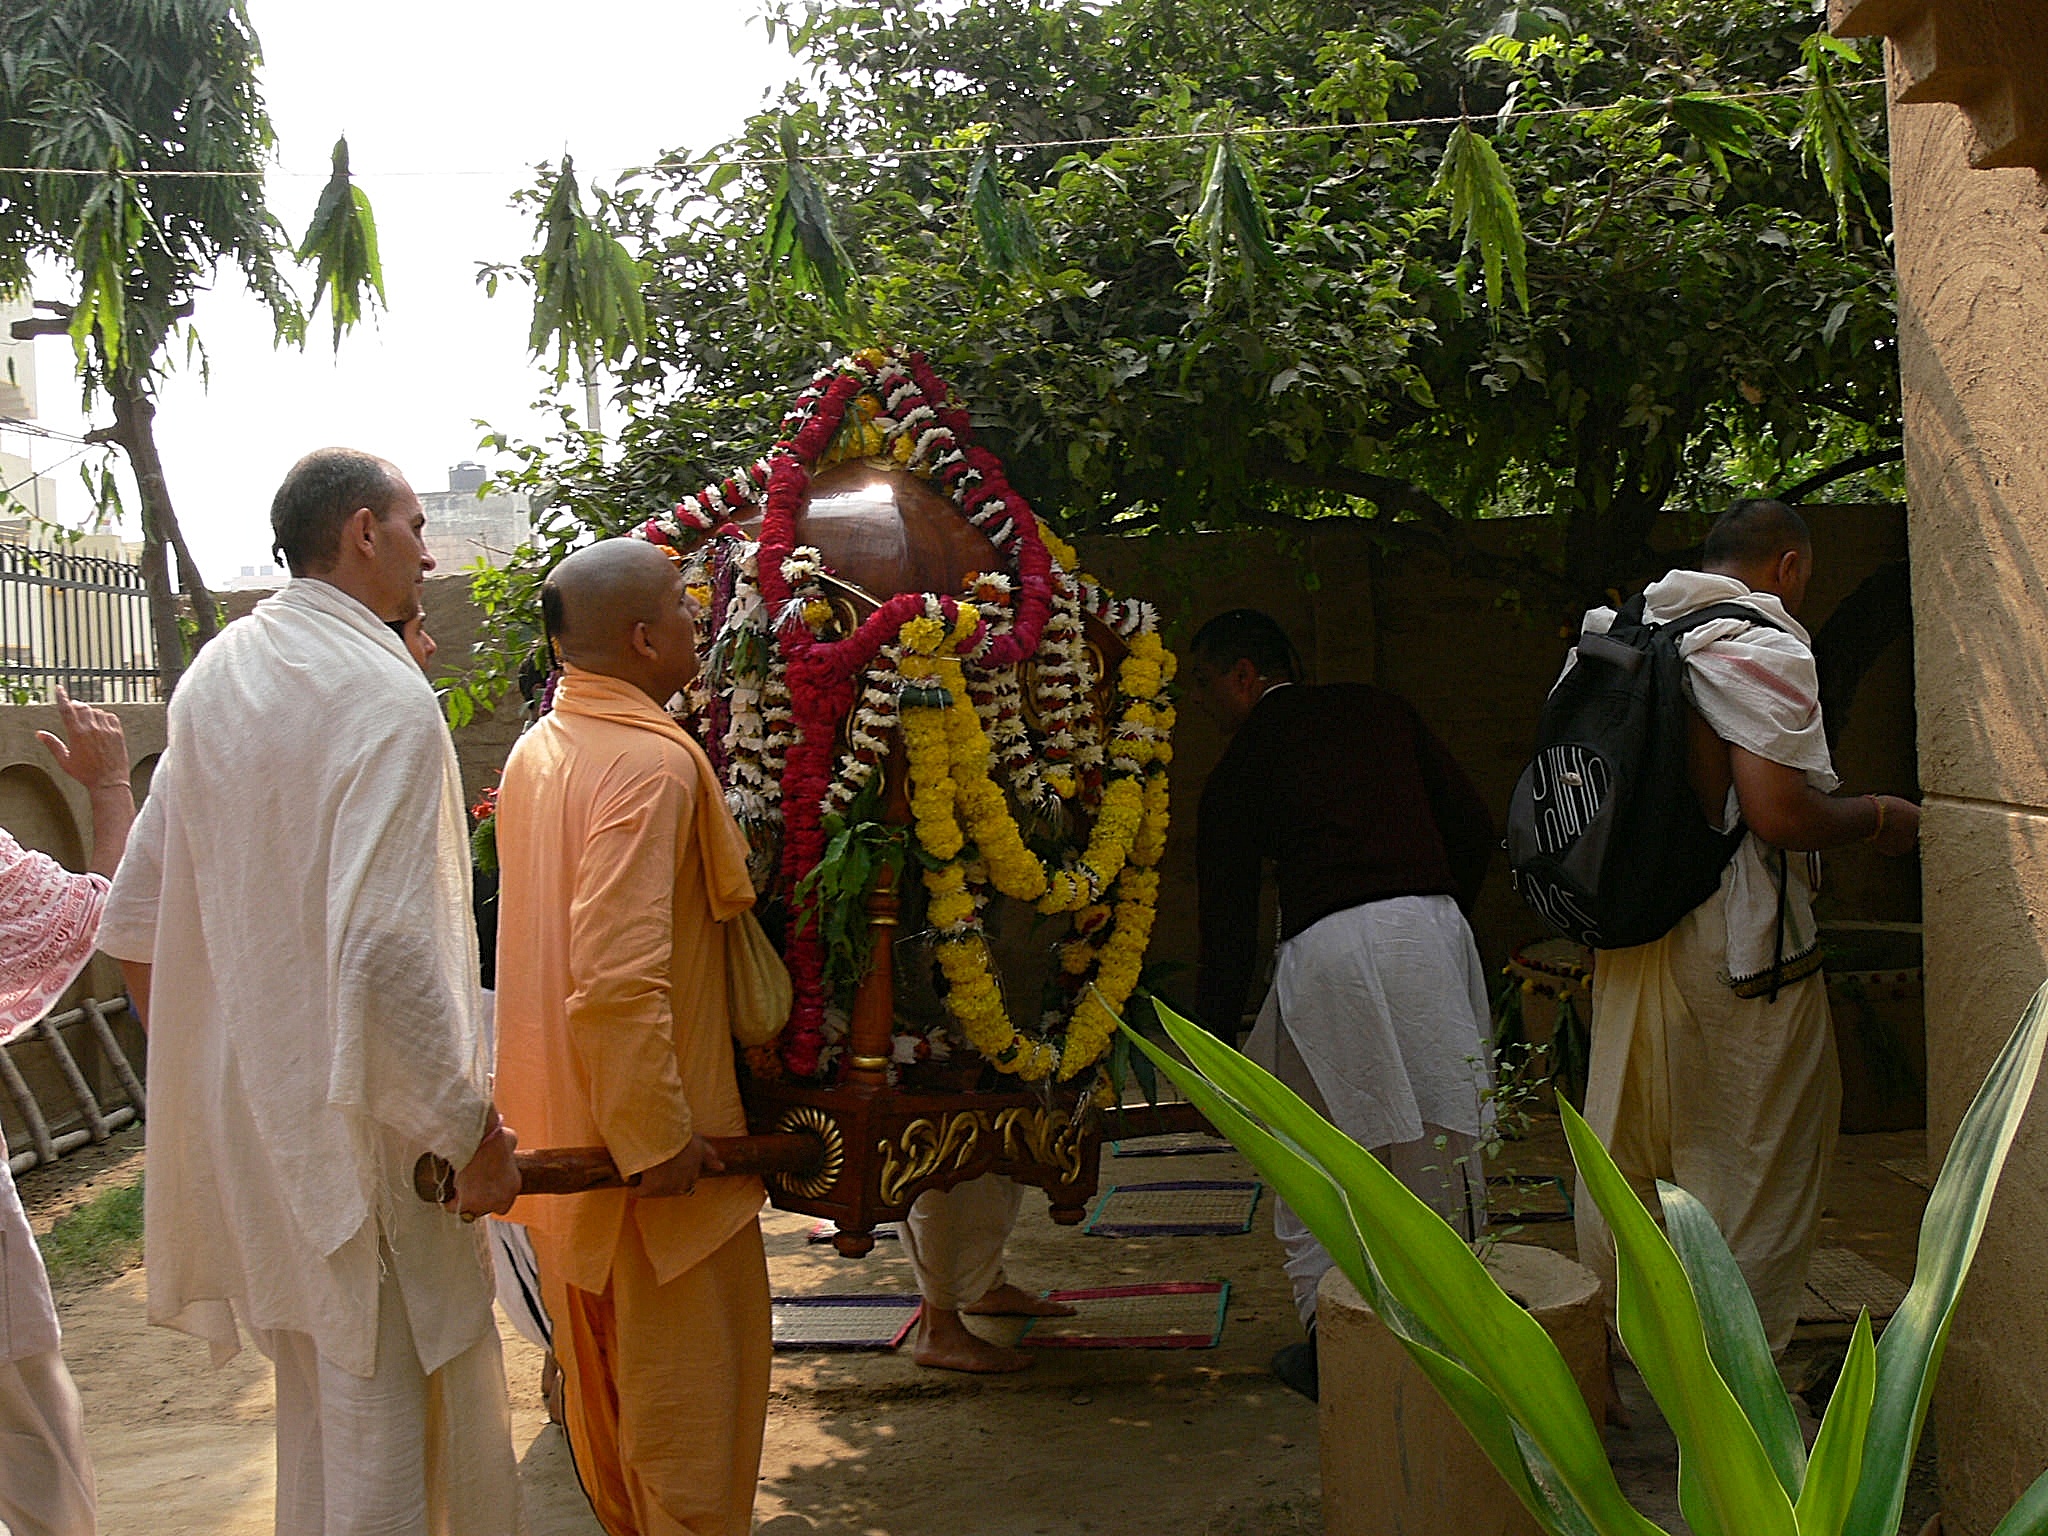 Radha Madhava arriving at a courtyard festival